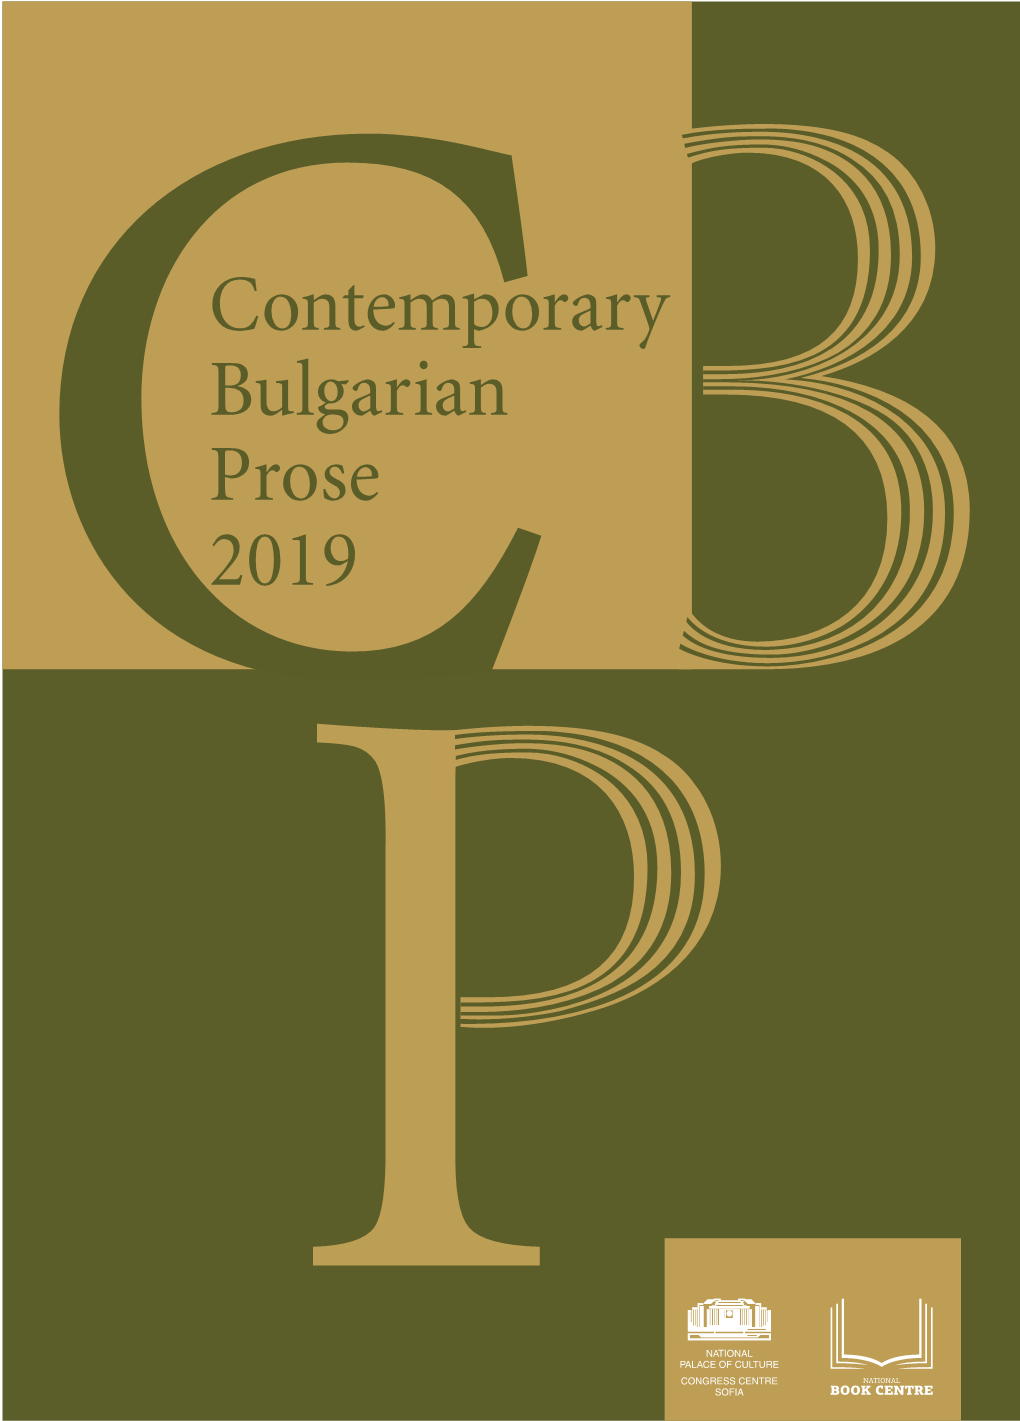 Contemporary Bulgarian Prose 2019 Ten Books from Bulgaria